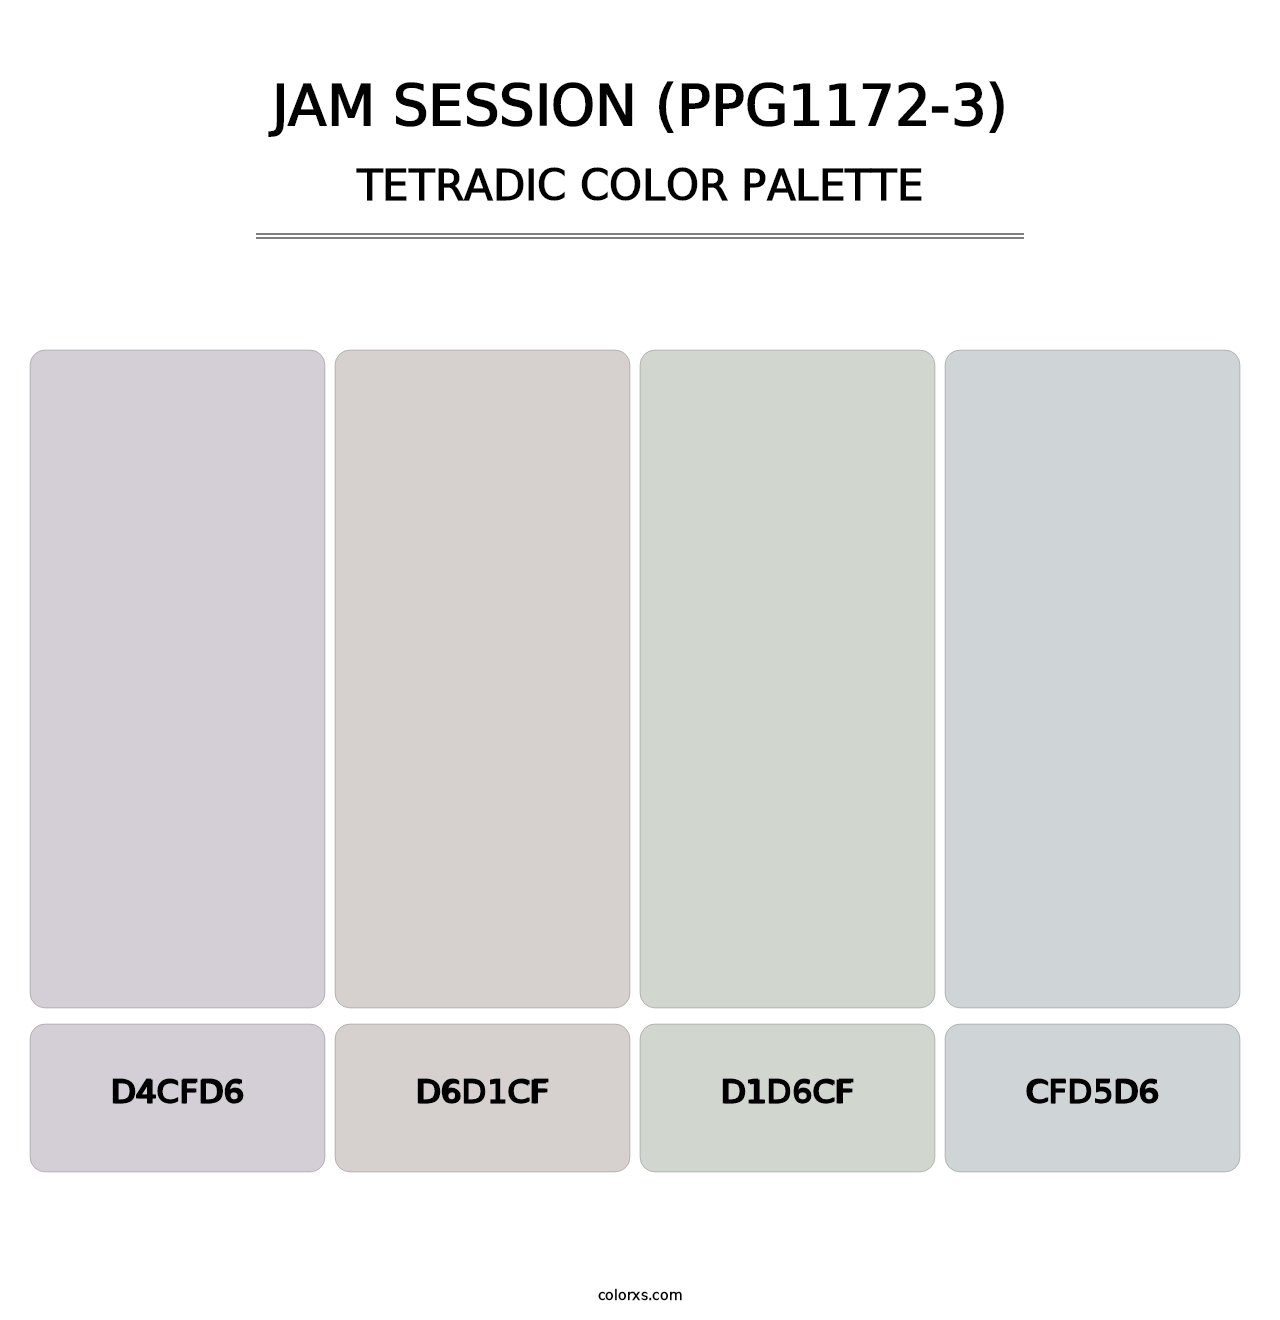 Jam Session (PPG1172-3) - Tetradic Color Palette